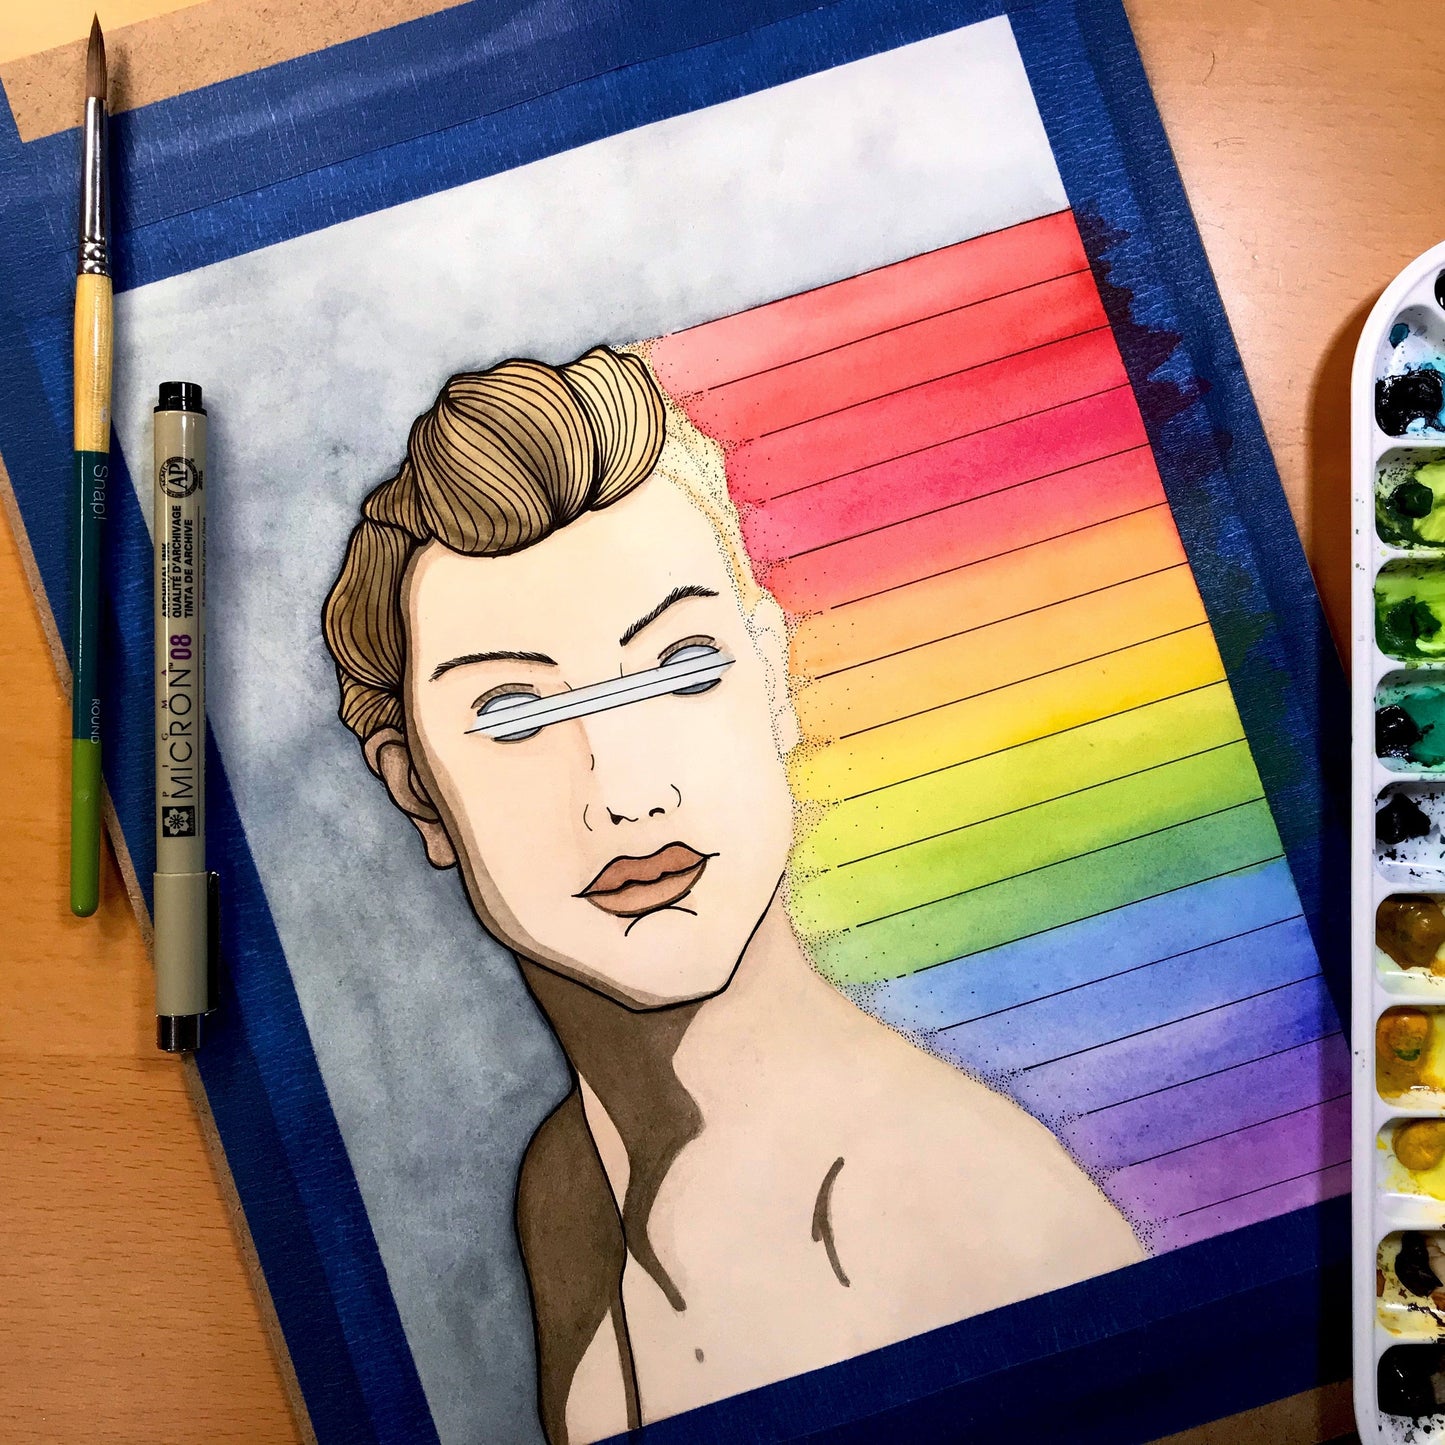 PinkPolish Design Original Art "Unseen Rainbows" Pride Inspired Original Watercolor & Ink Illustration